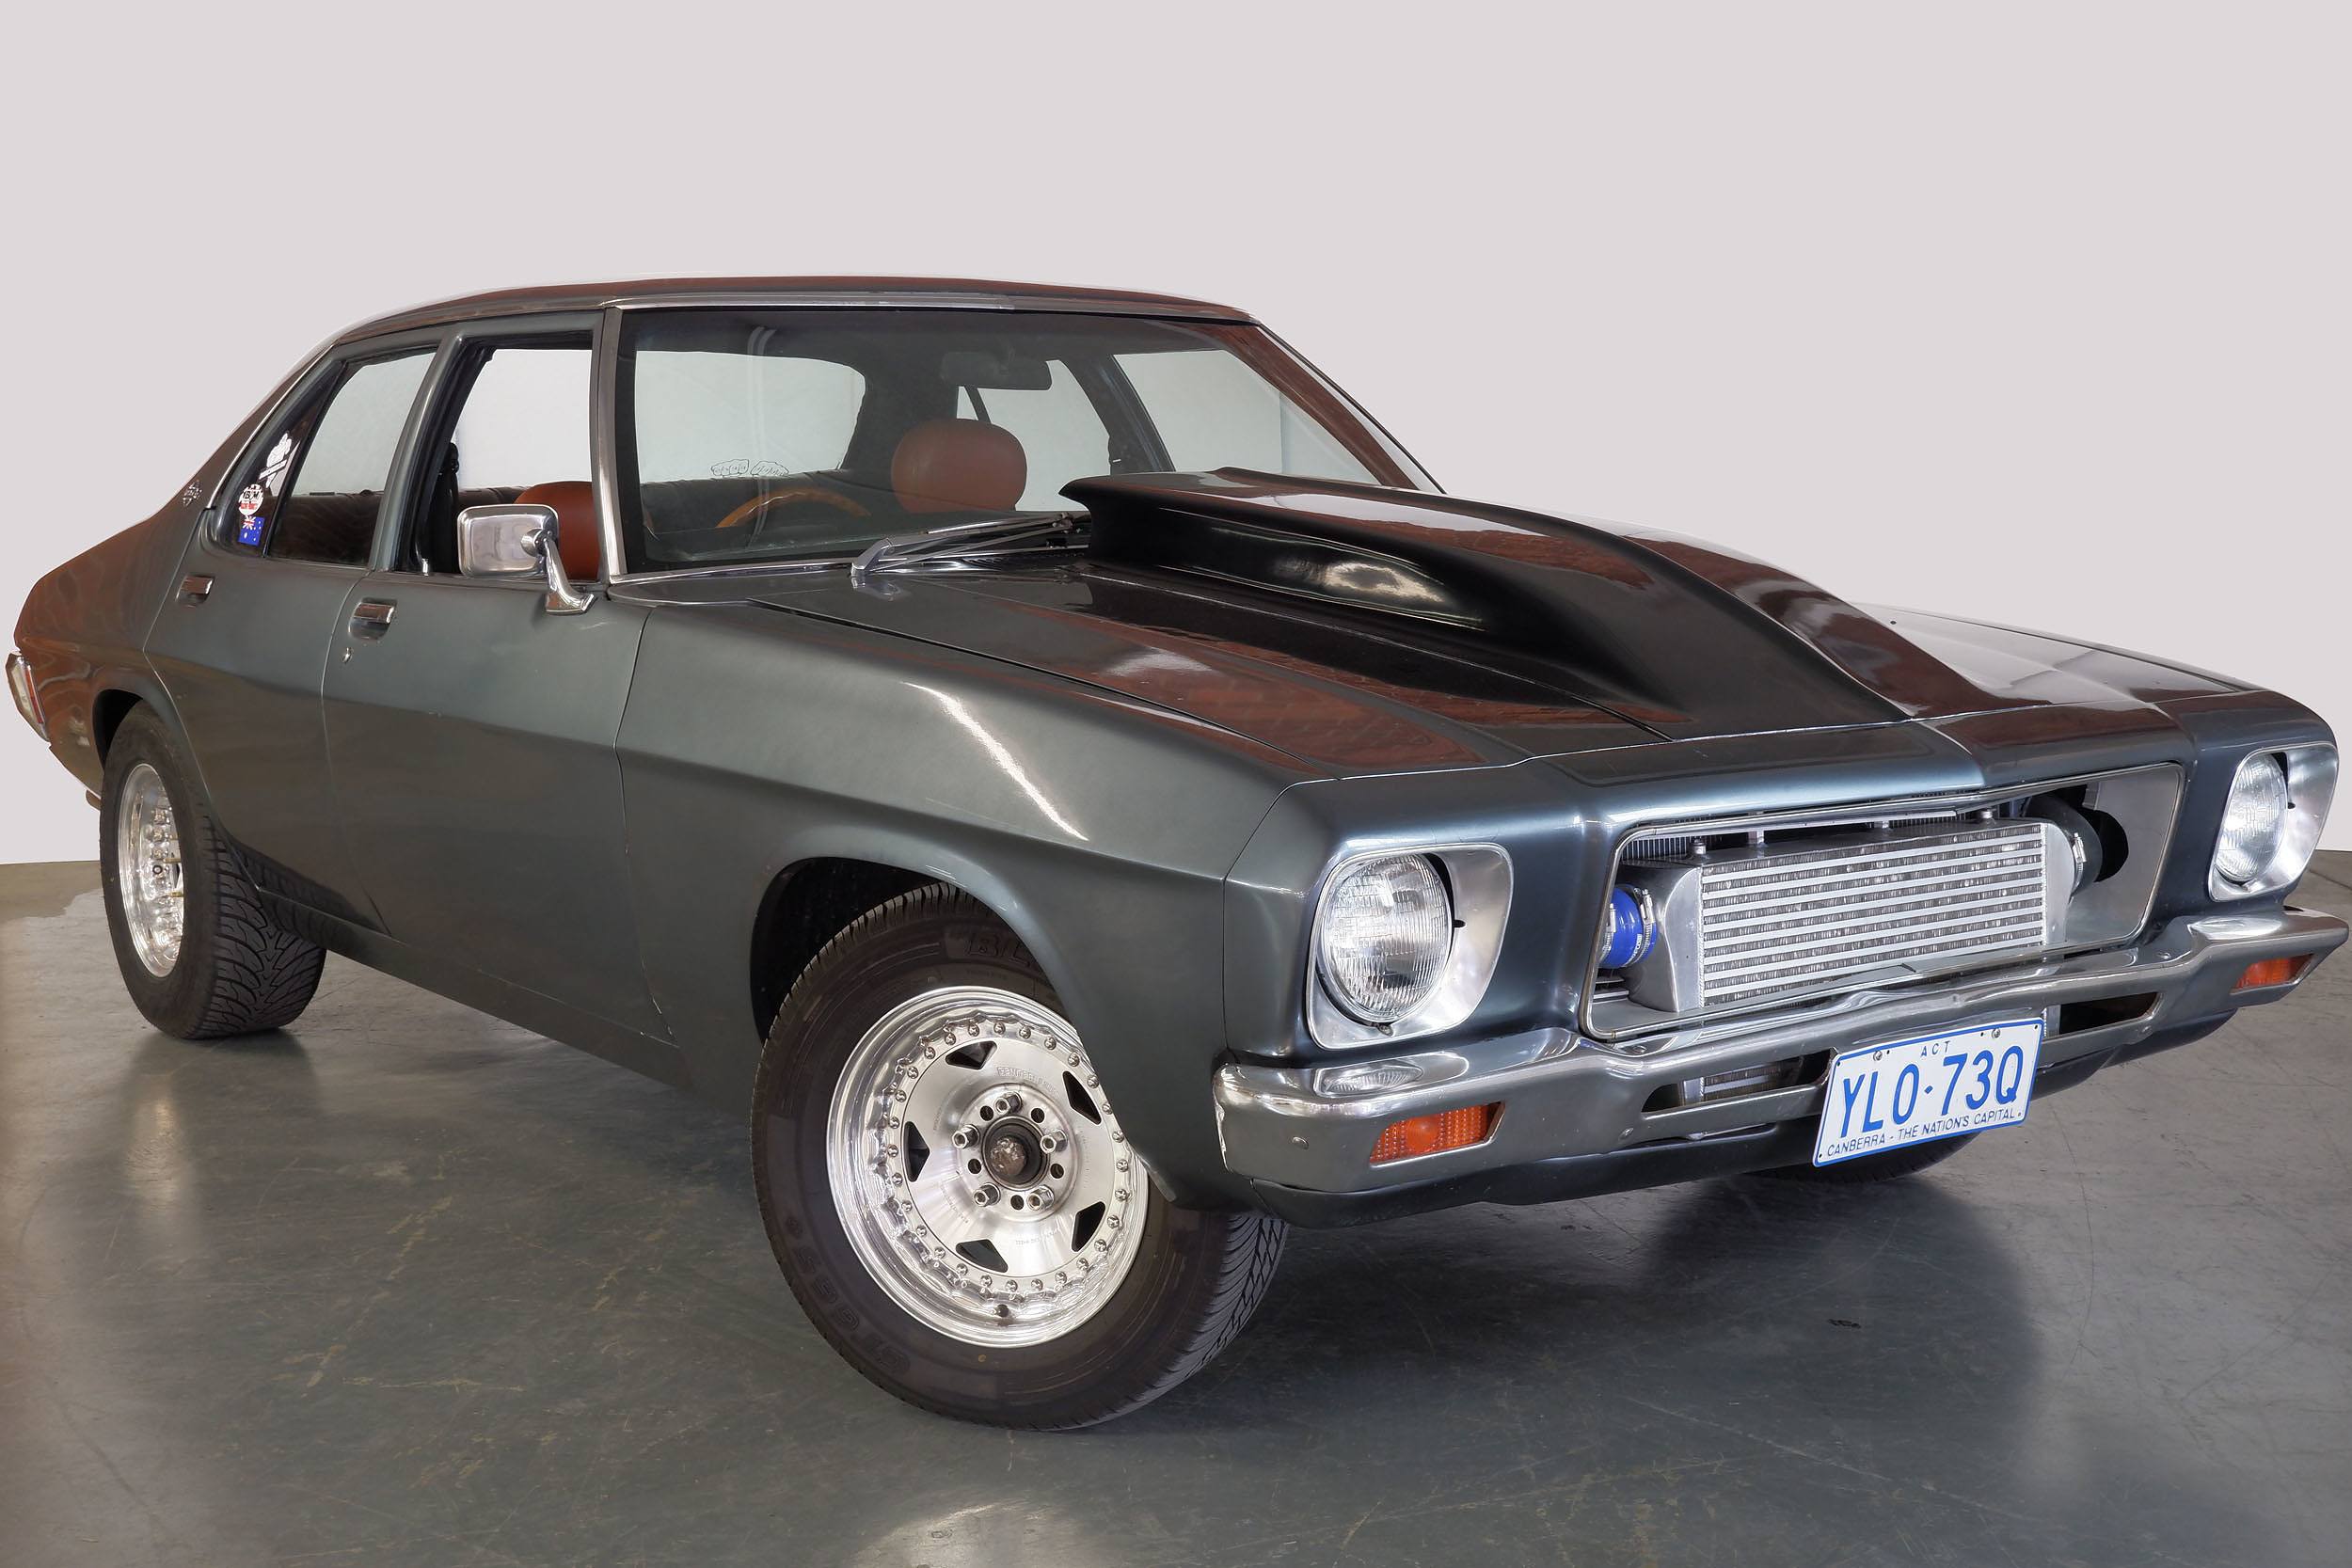 02 1973 Holden Kingswood Hq V8 Turbo 4d Modified Sedan Grey 4 1l